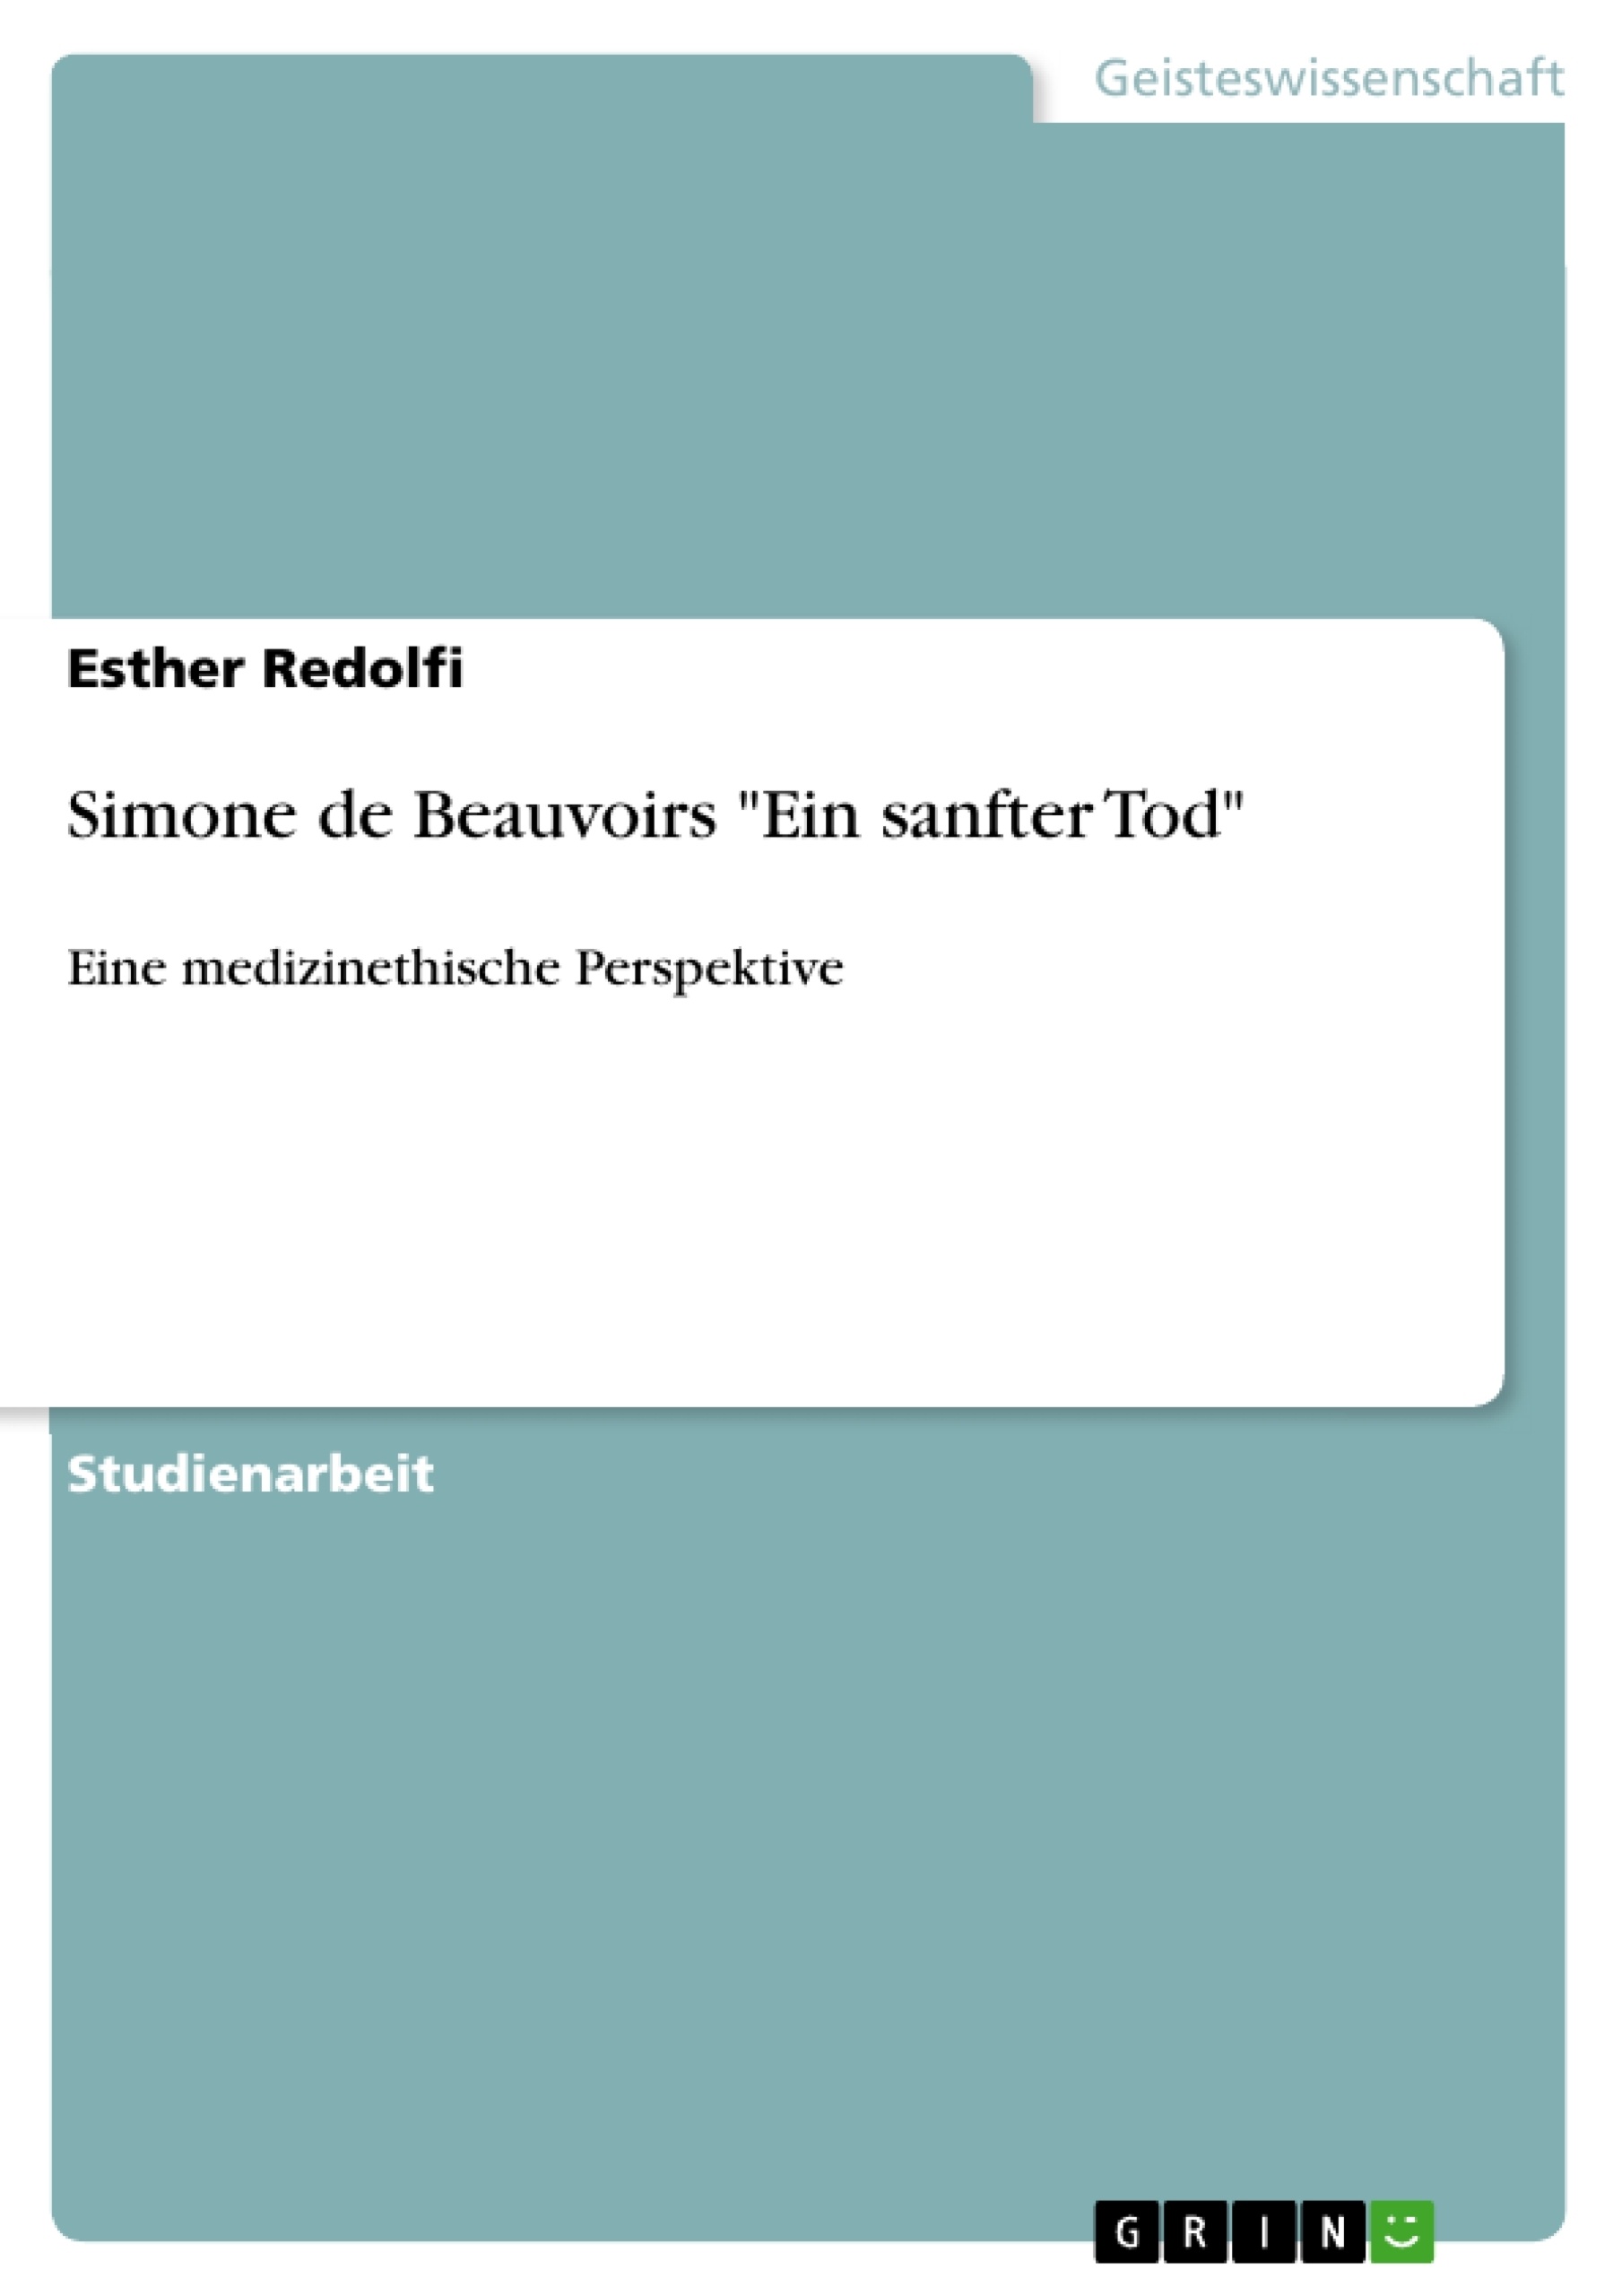 Title: Simone de Beauvoirs "Ein sanfter Tod"